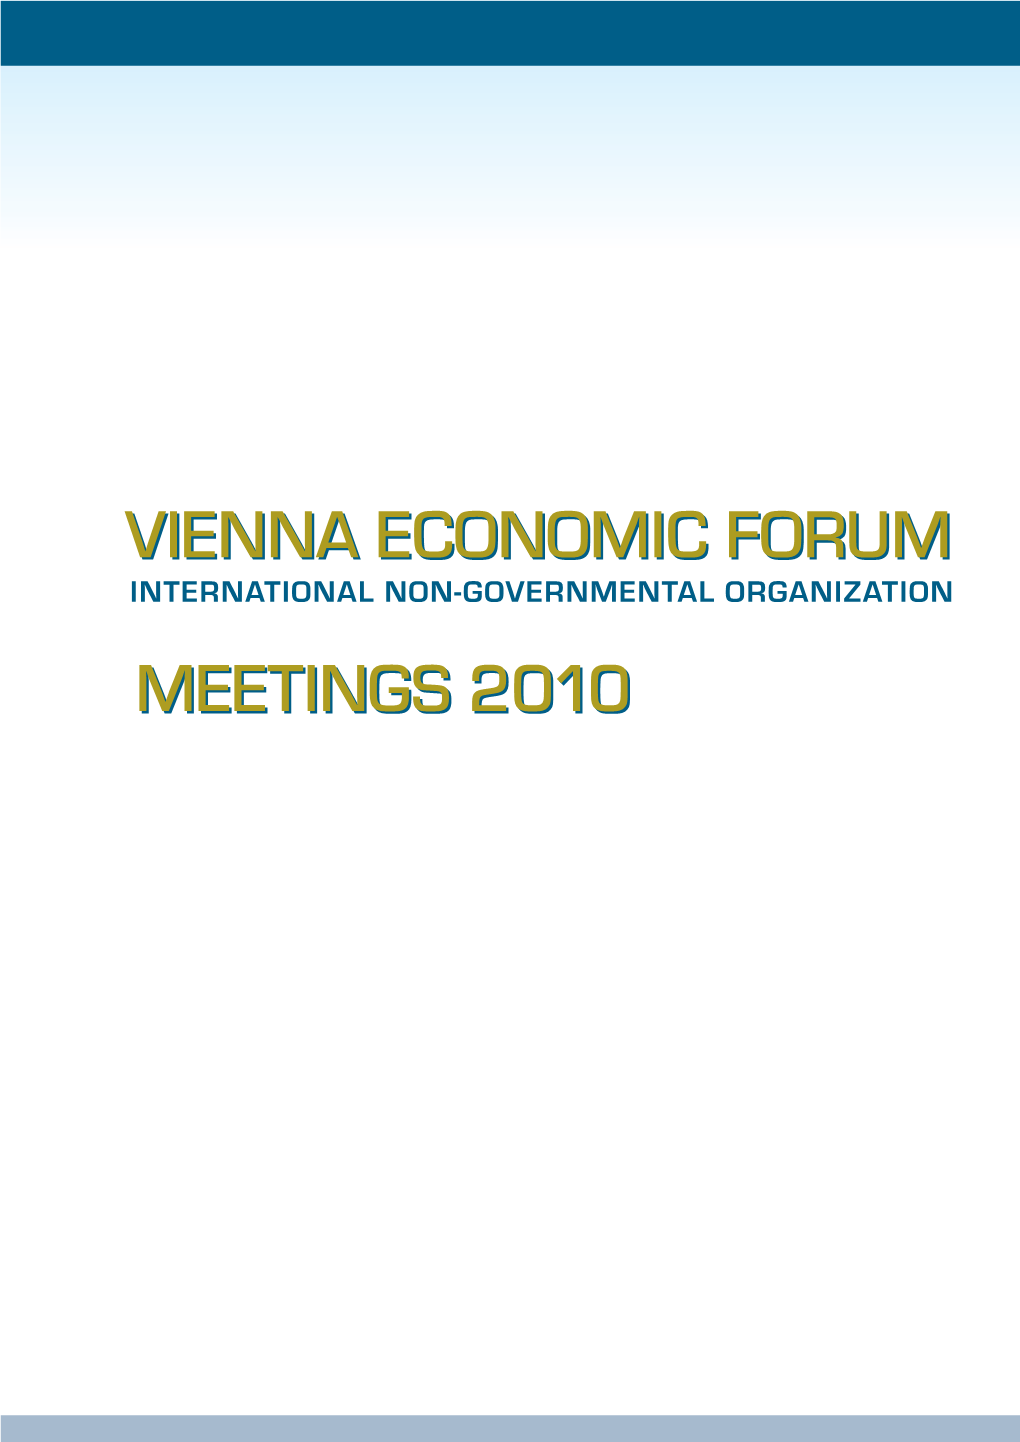 Meetings 2010 Vienna Economic Forum